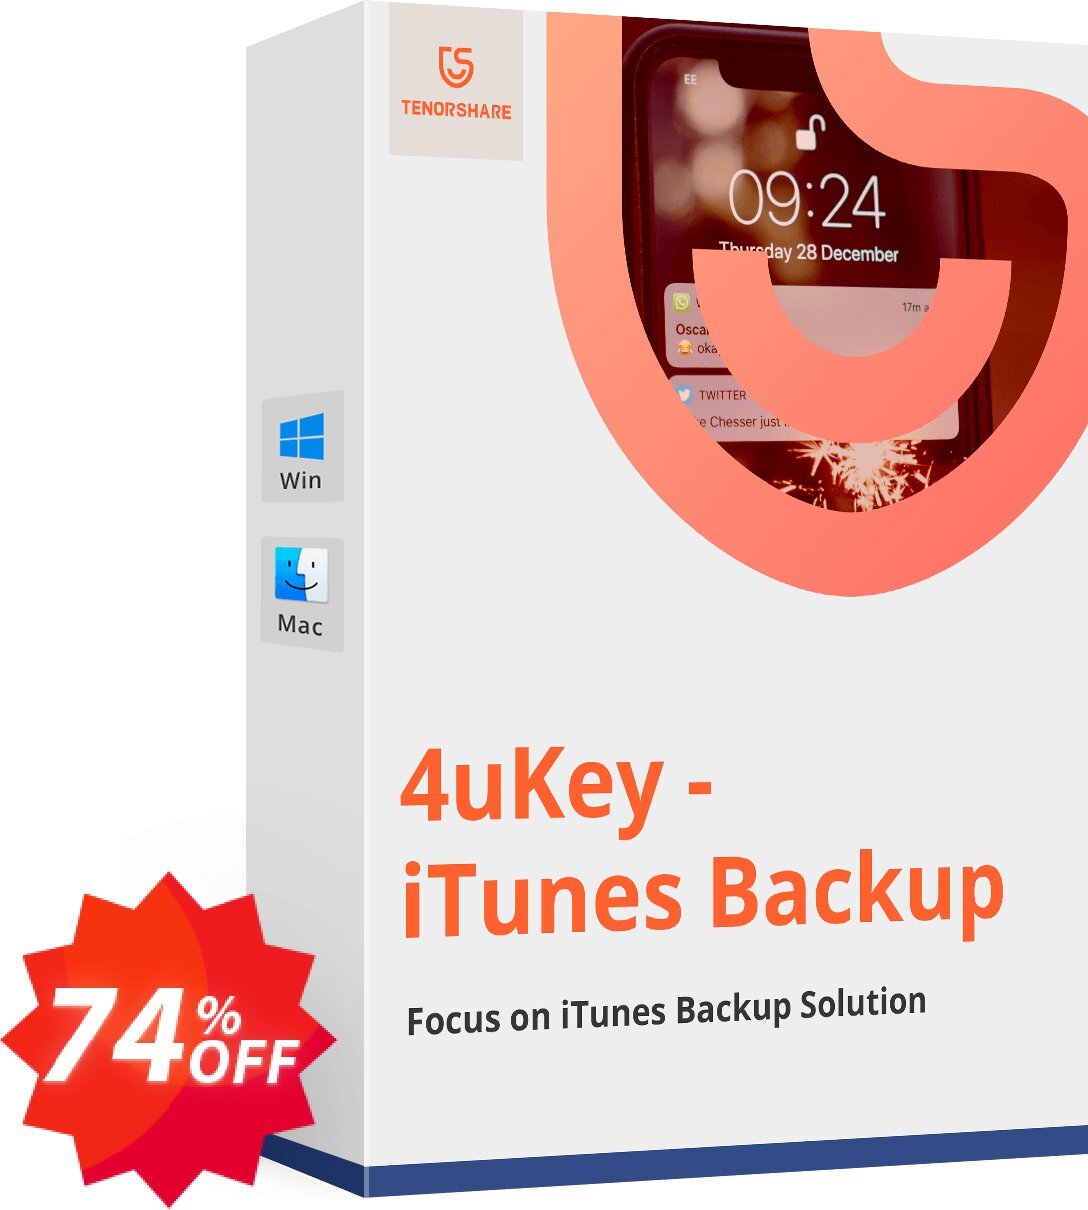 Tenorshare 4uKey iPhone Backup Unlock Coupon code 74% discount 